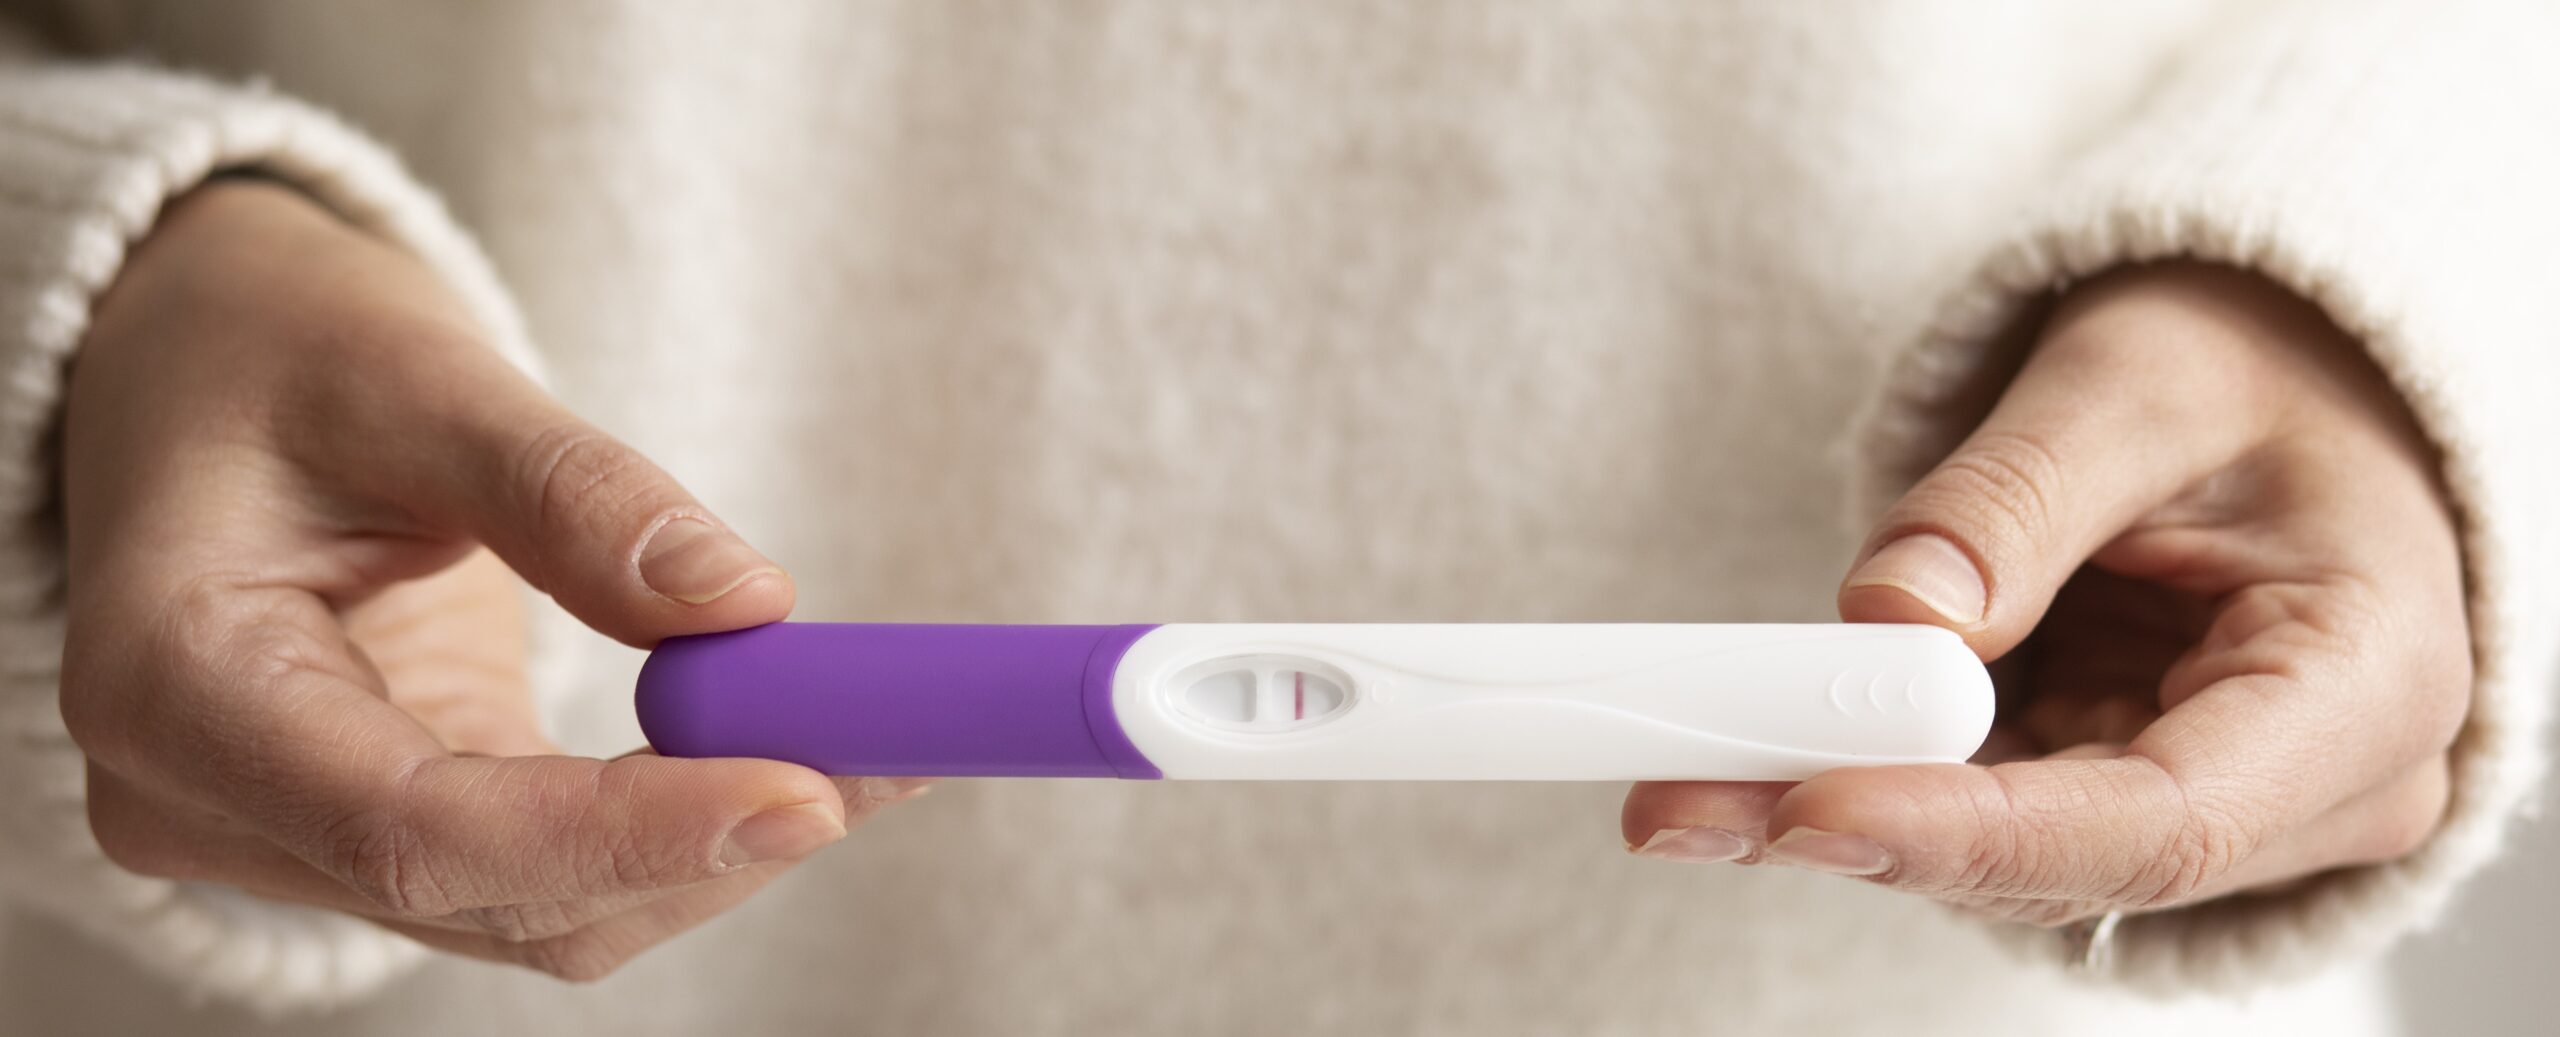 close-up-hands-holding-pregnancy-test